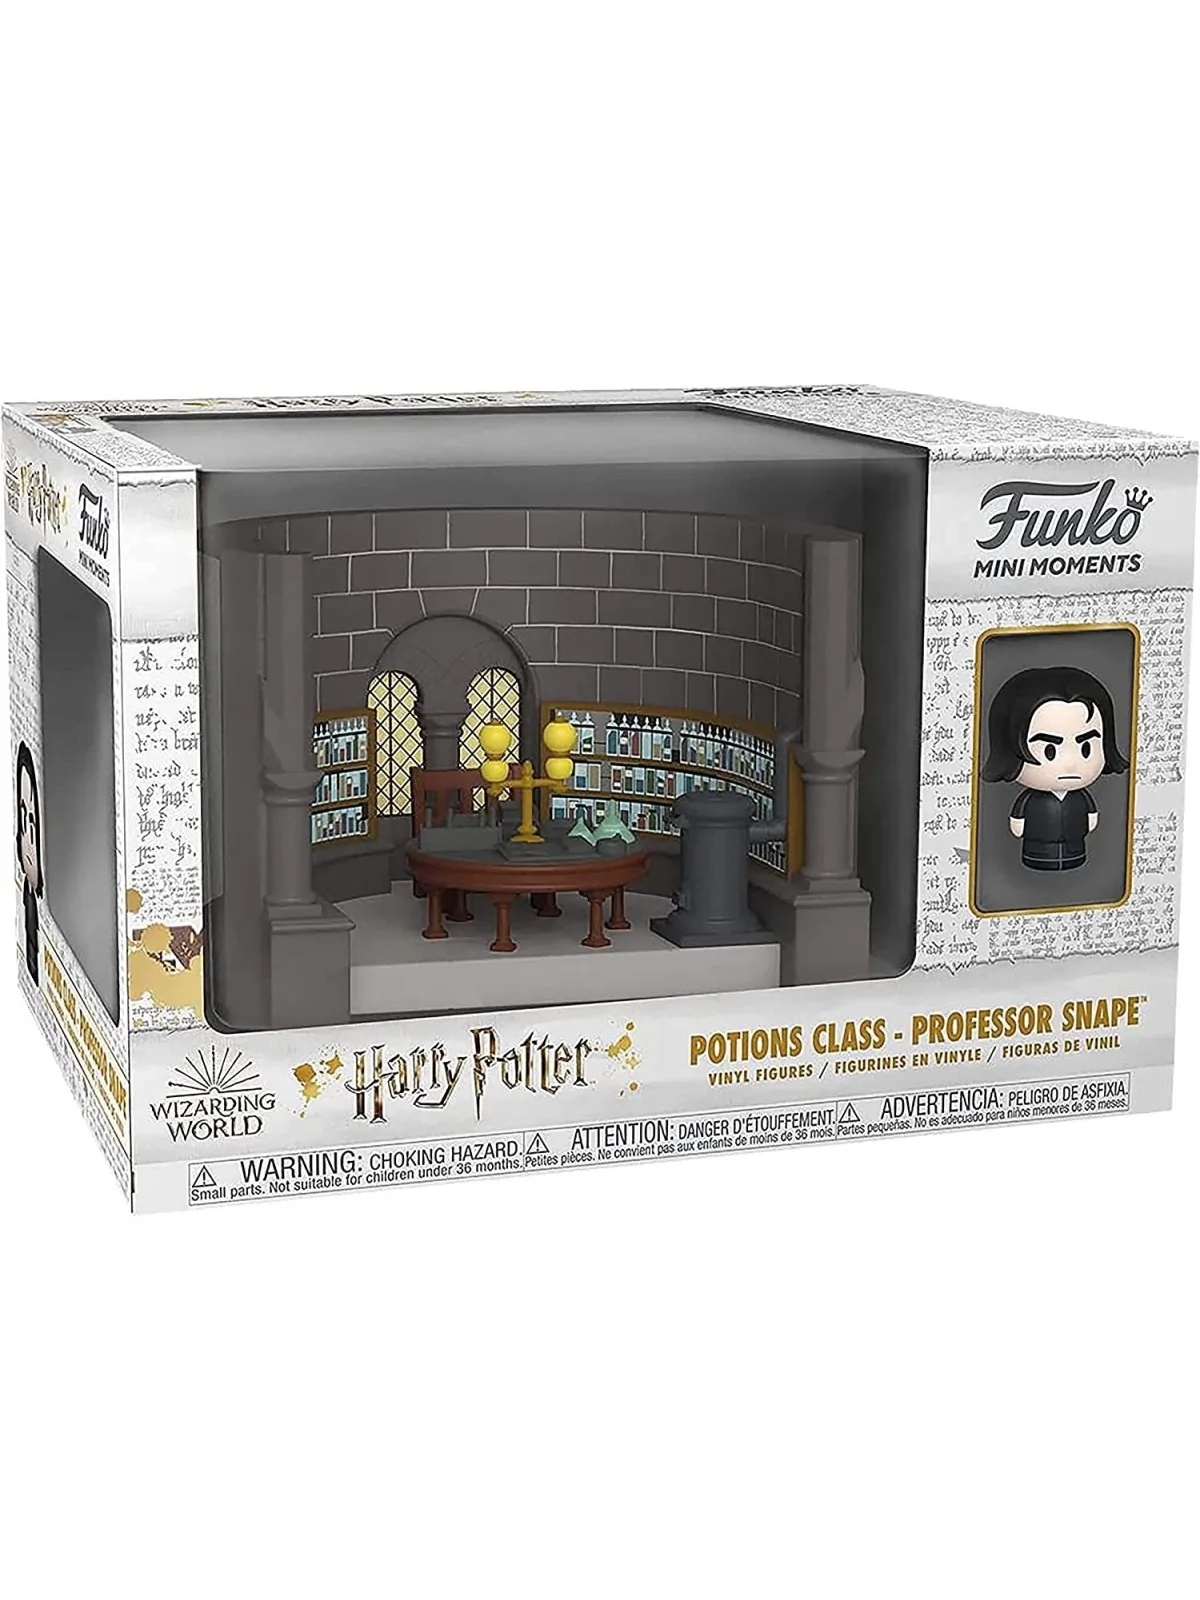 Comprar Mini Moments Funko Harry Potter Aniversario Profesor Snape bar